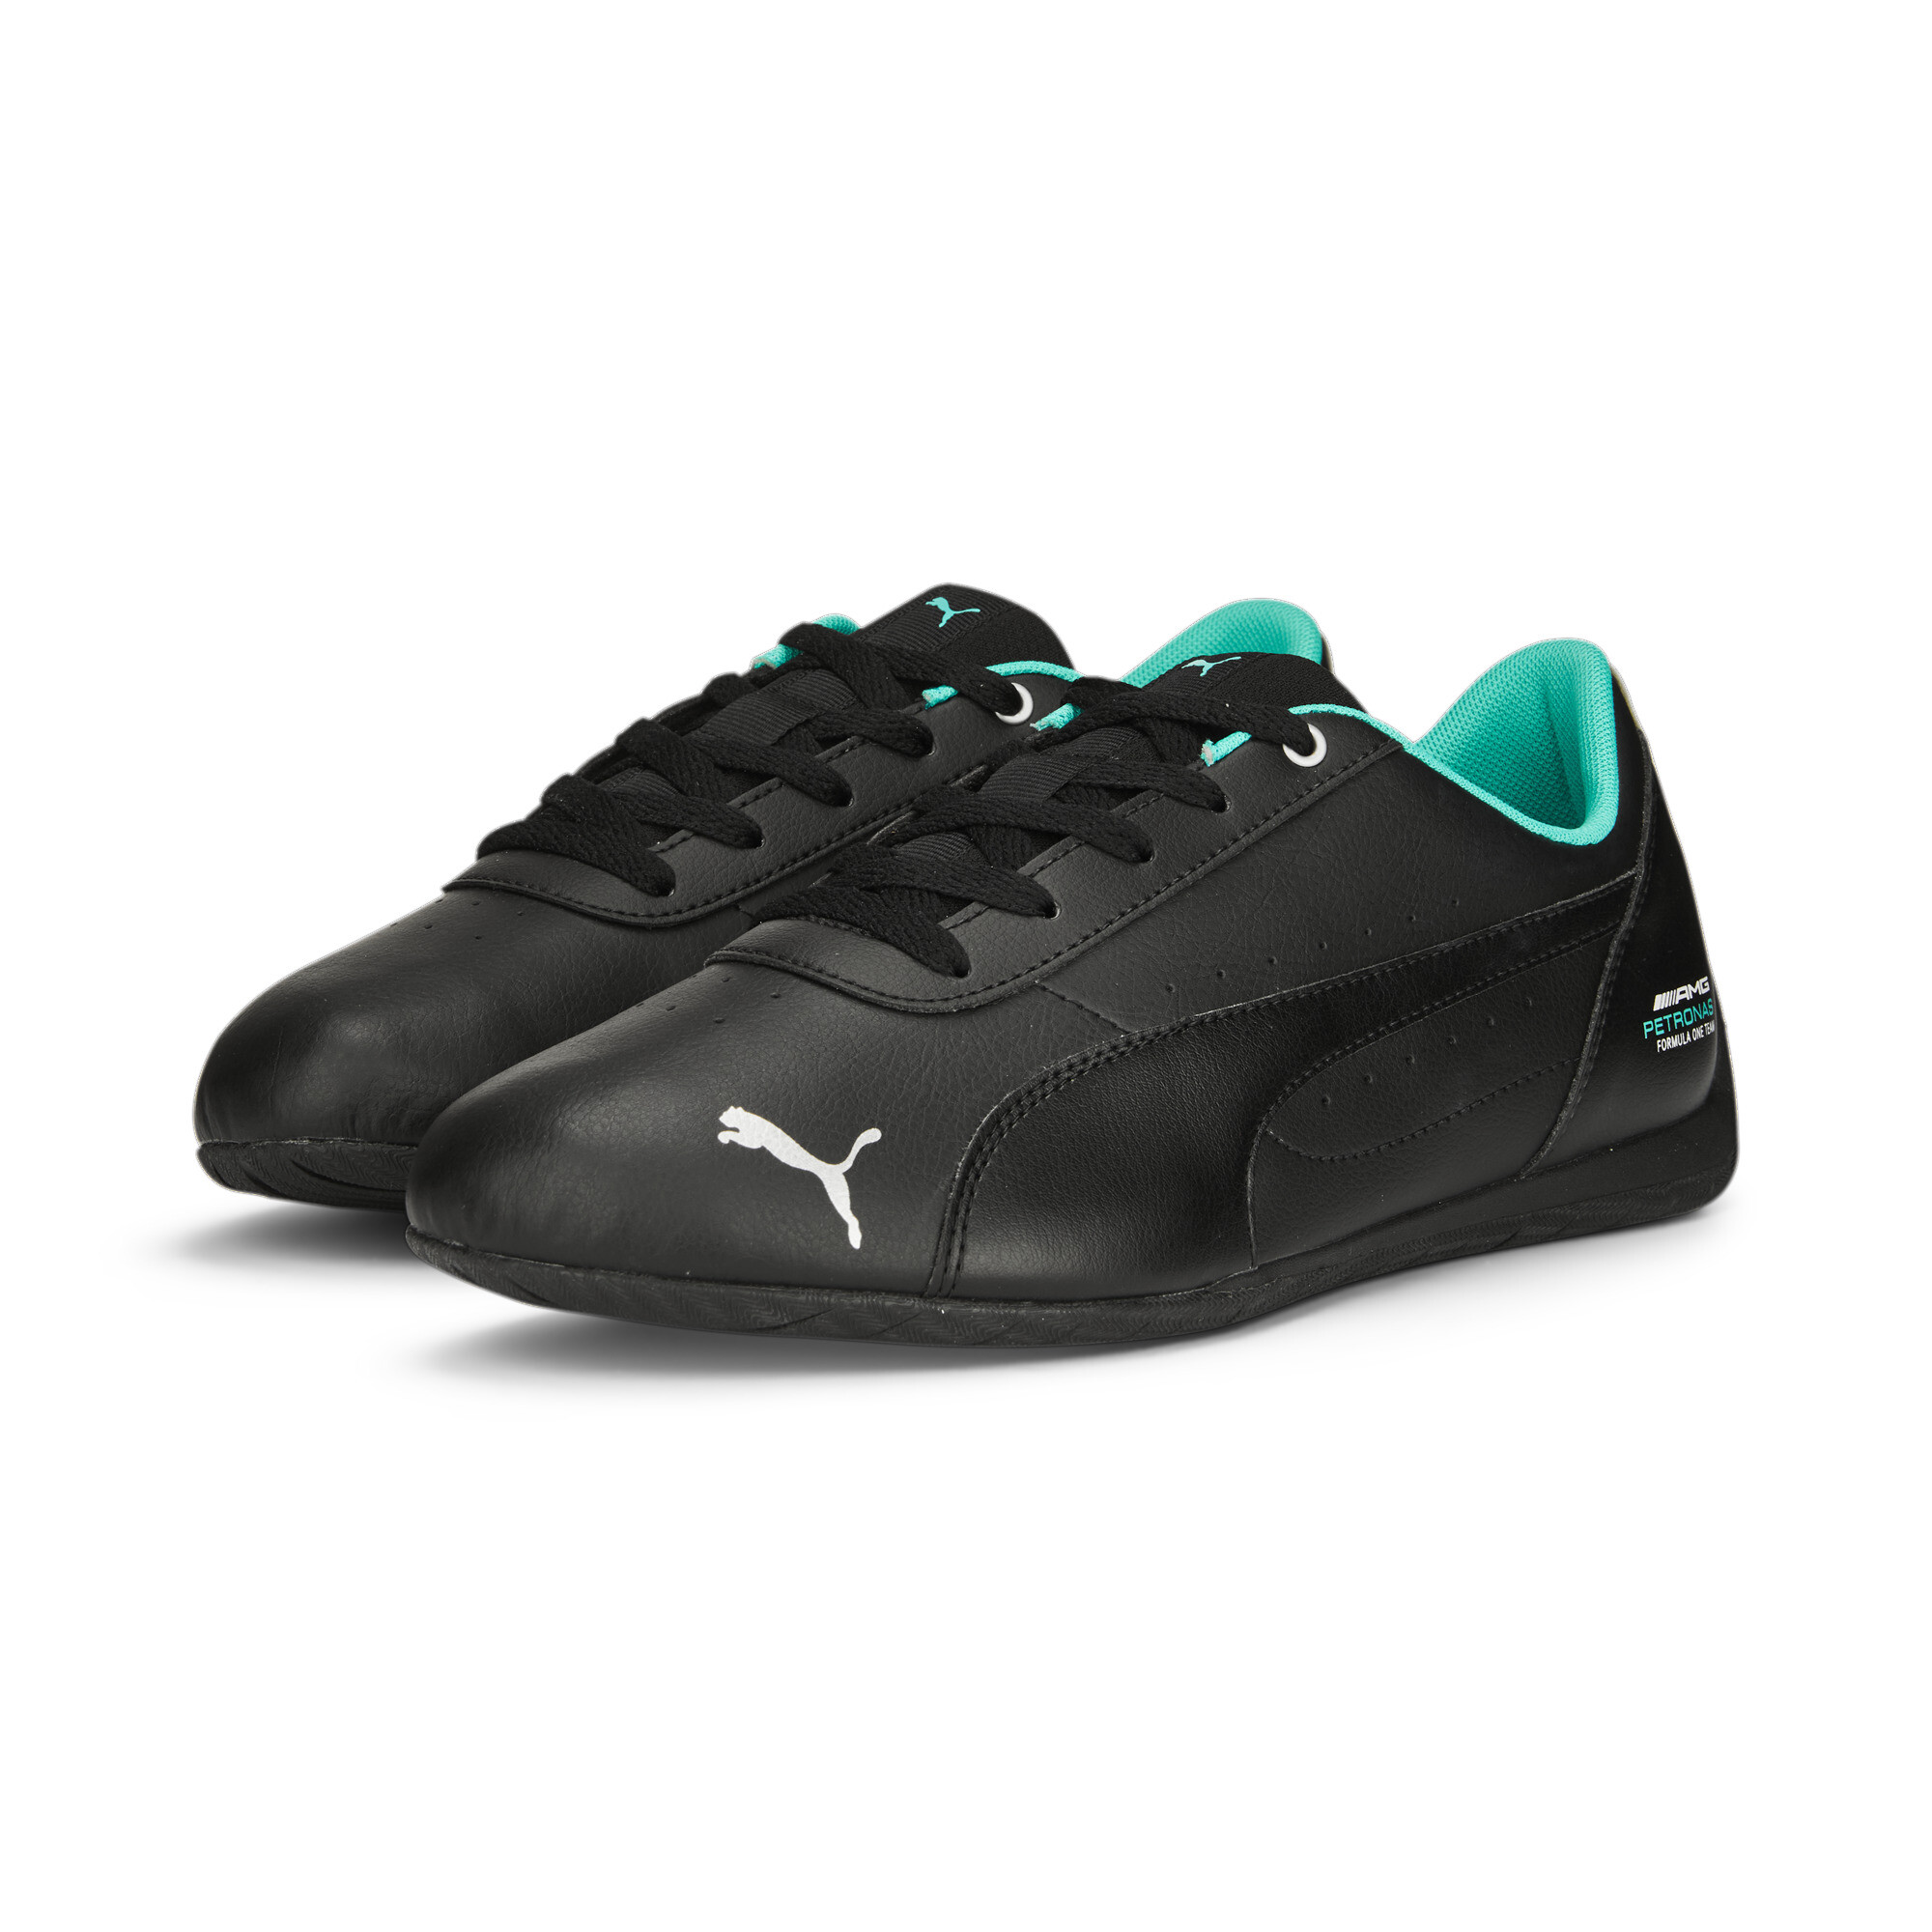 Puma Mercedes F1 Neo Cat Motorsport Shoes, Black, Size 47, Shoes